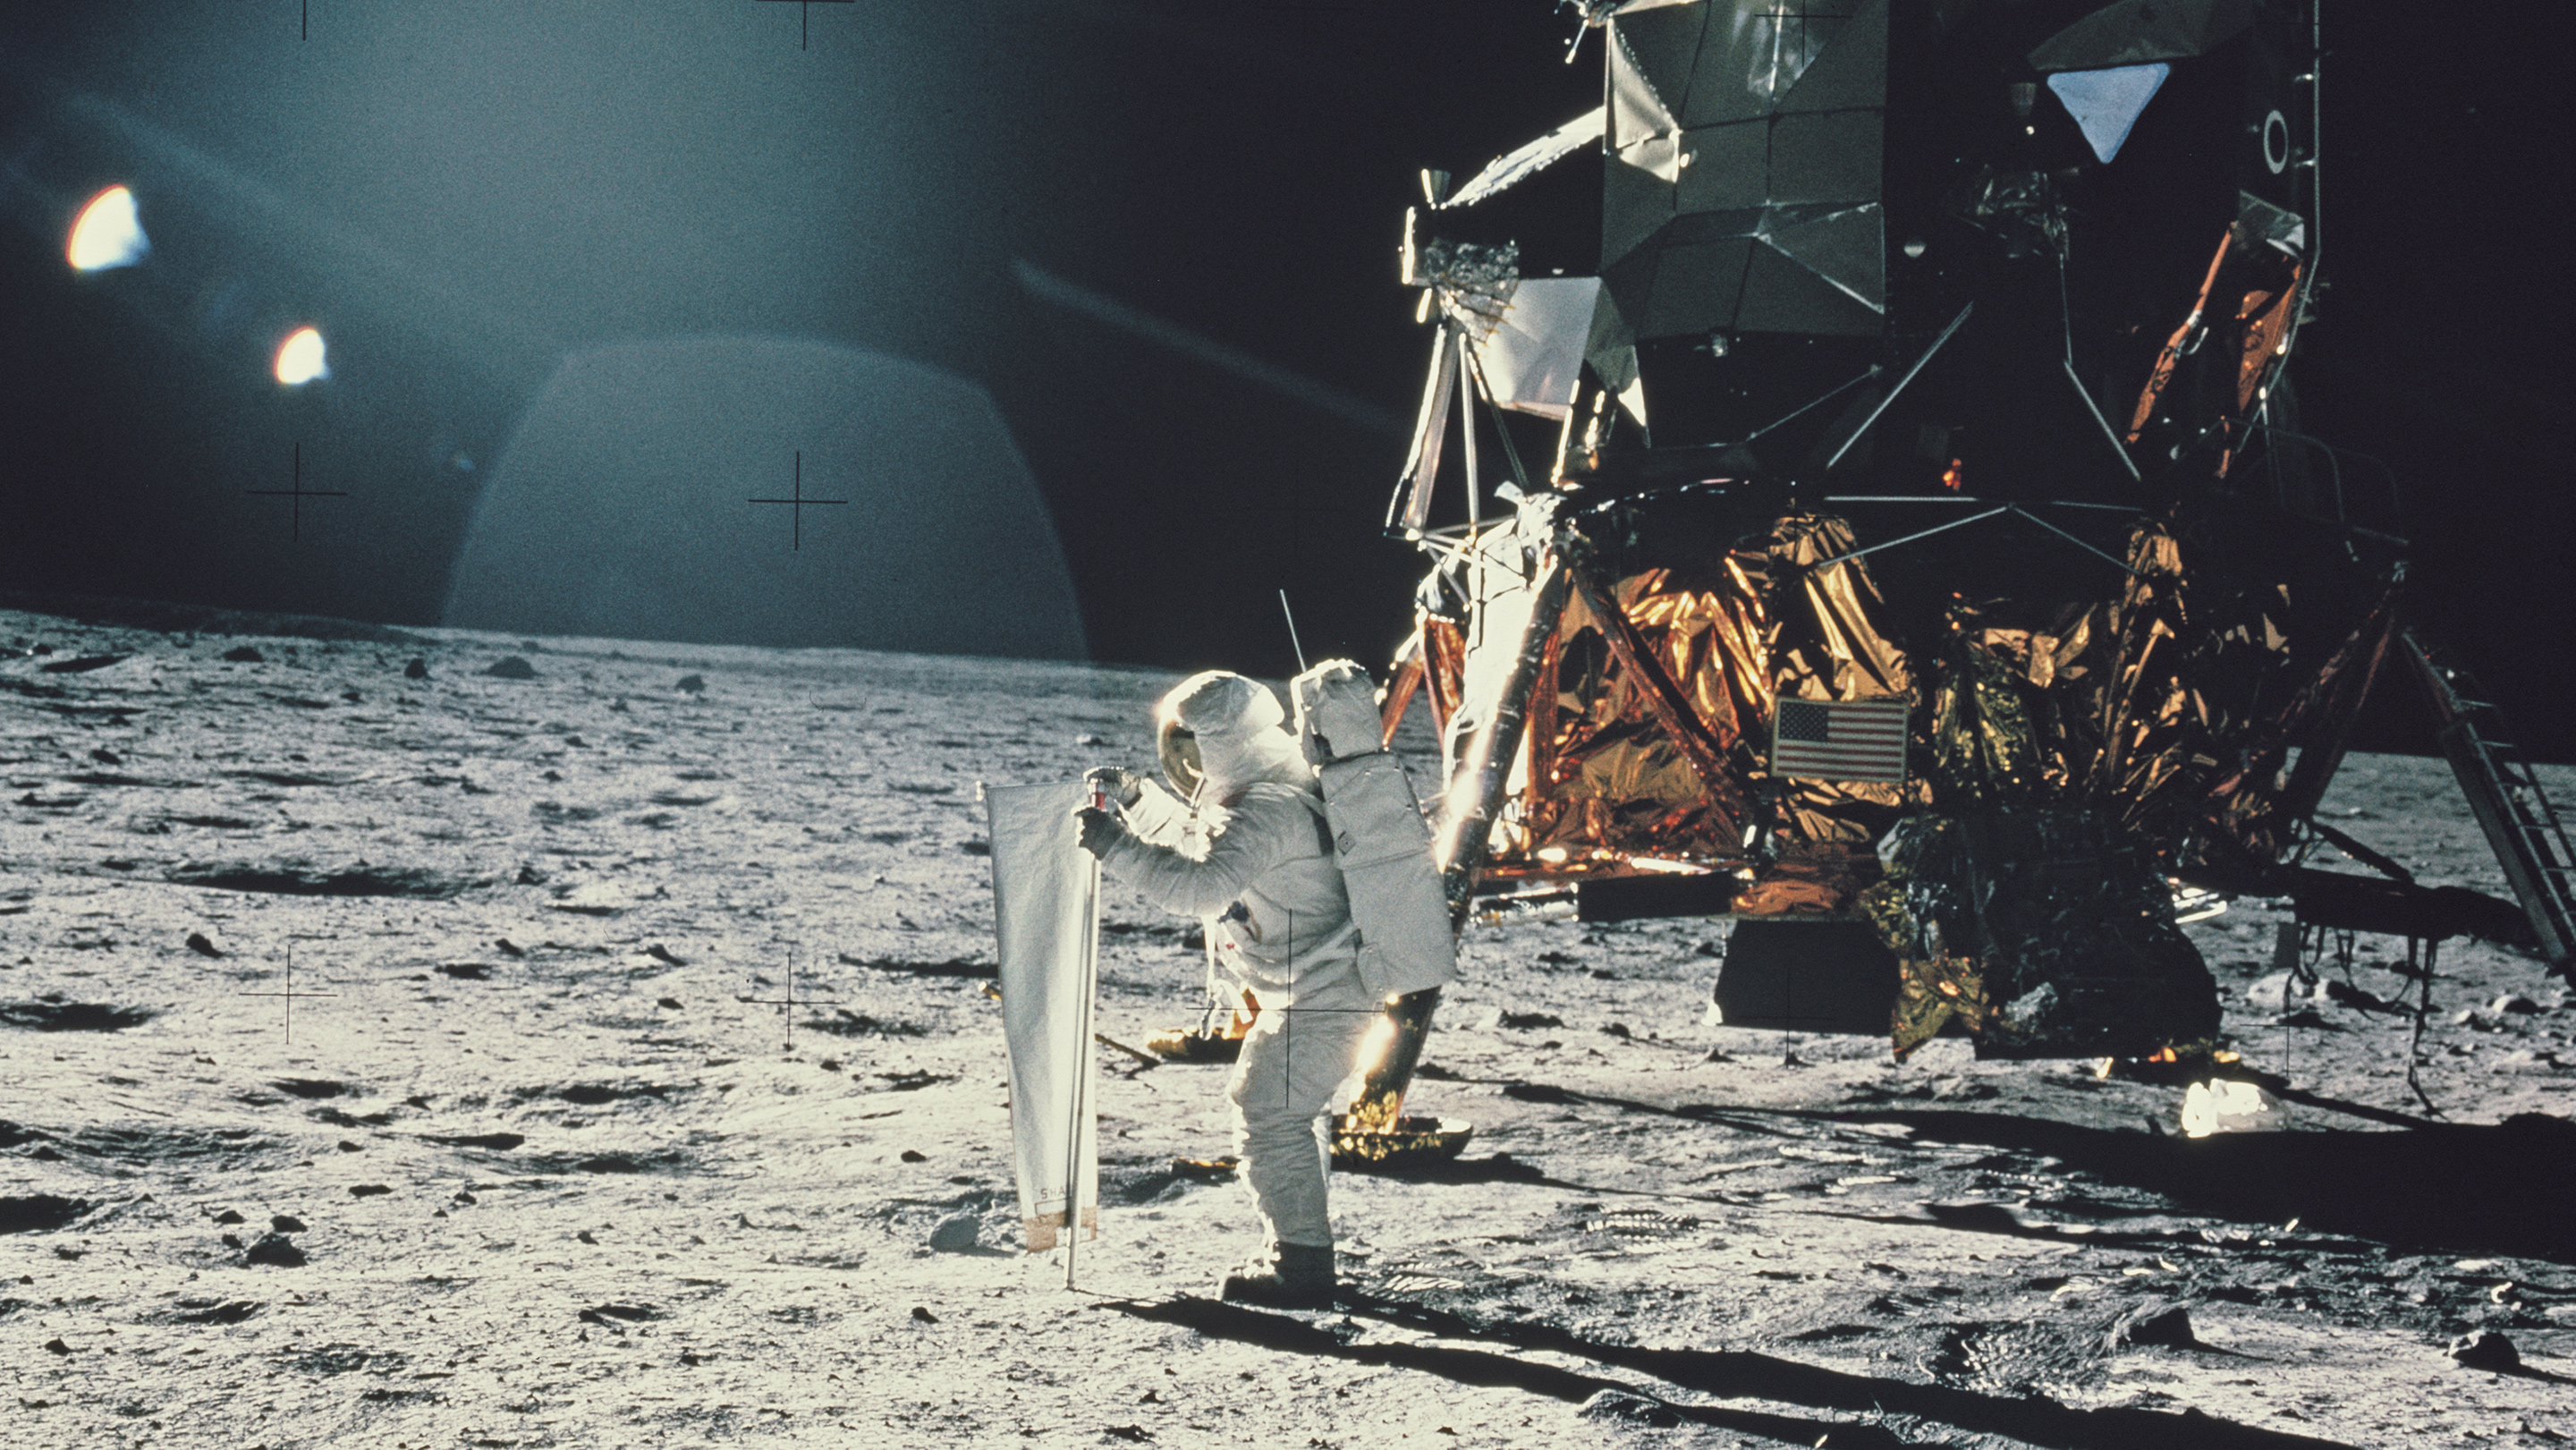 Посмотри на луну на улице великолепно. Апполо 11 на Луне. Миссия Аполлон 11.